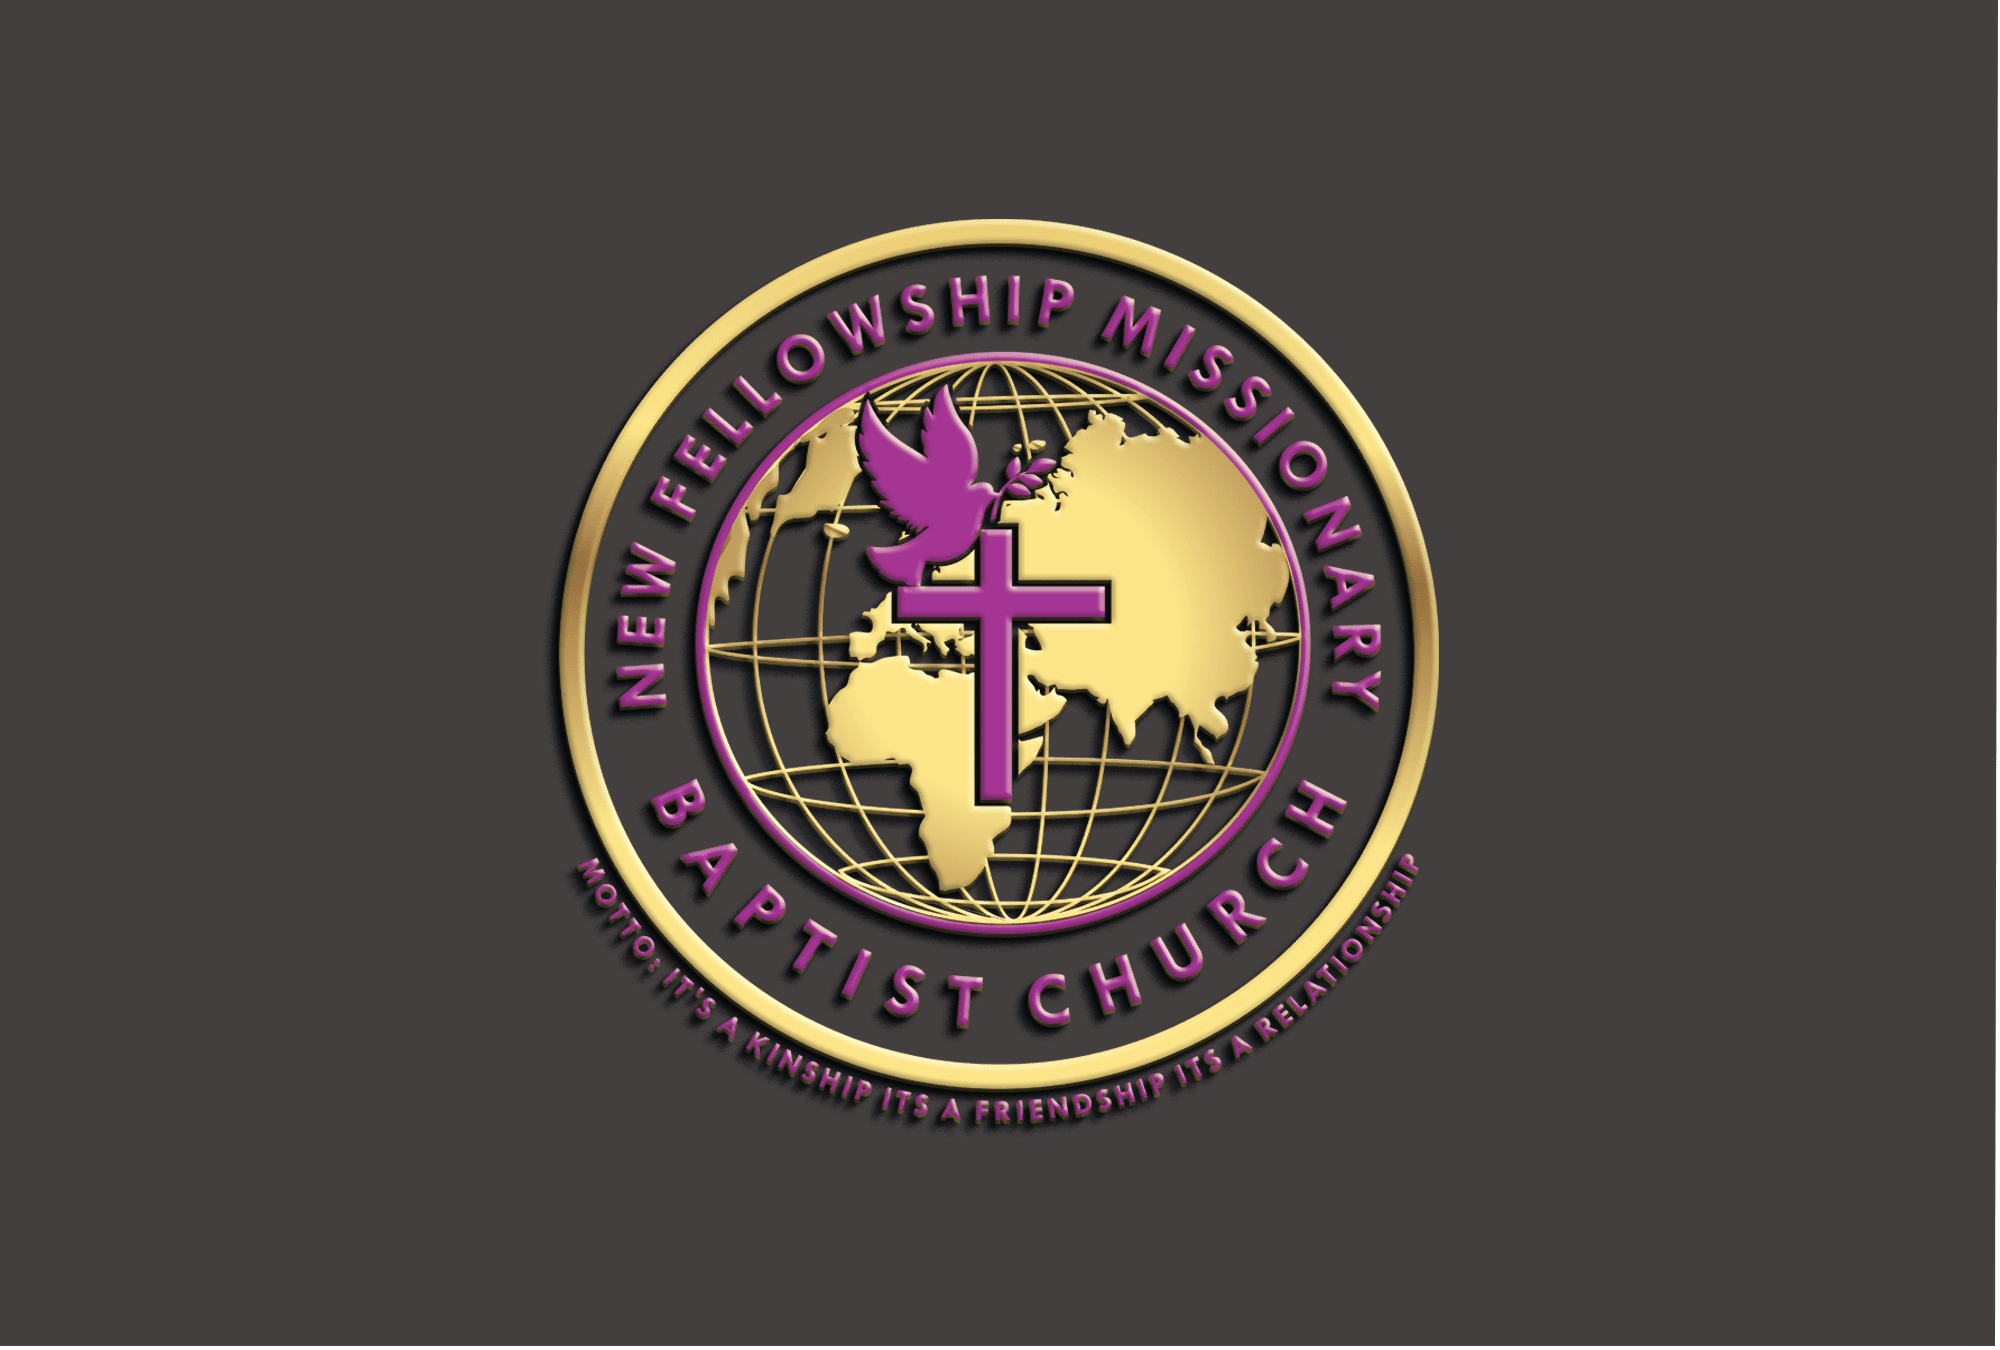 New Fellowship Missionary Baptist Church-The New Ship